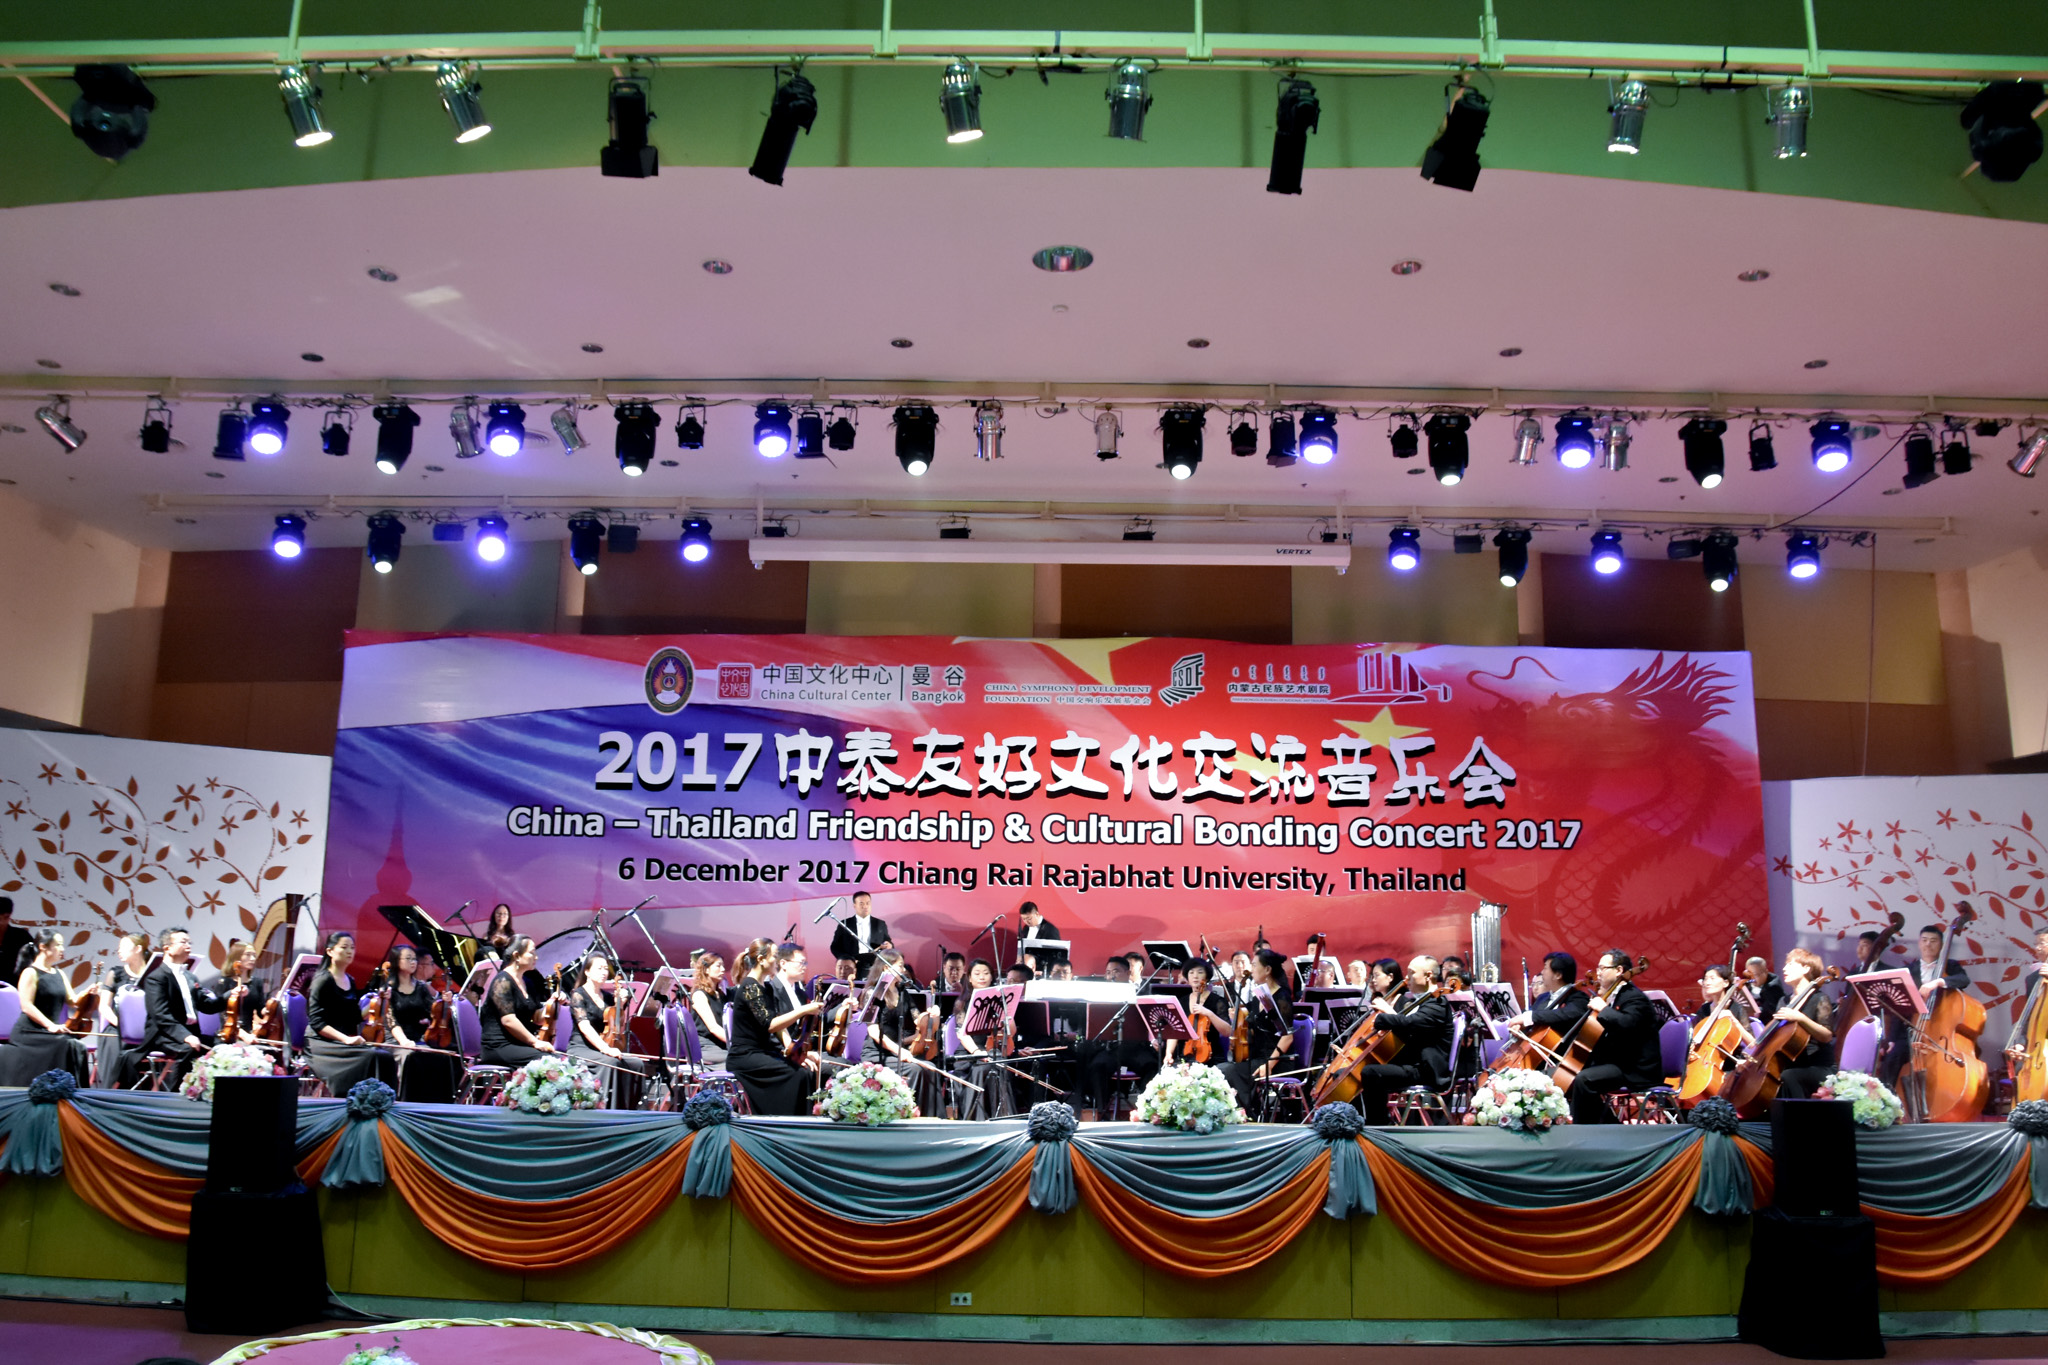 China-Thailand Friendship & Cultural Bonding Concert 2017